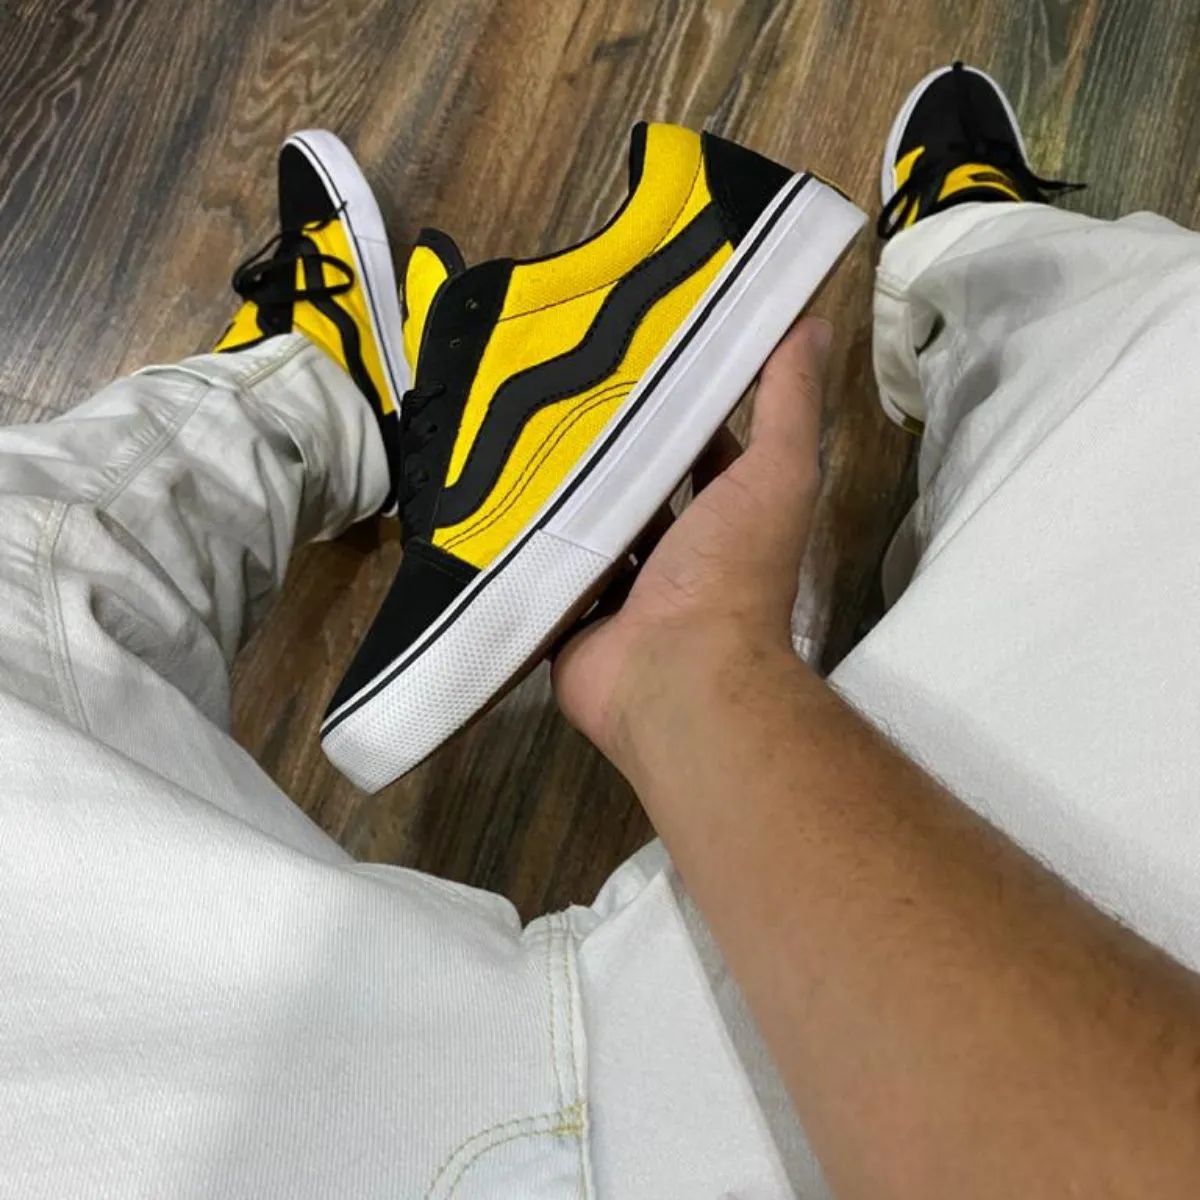 Tenis Mad Rats Preto com Amarelo - Lace Sneakers